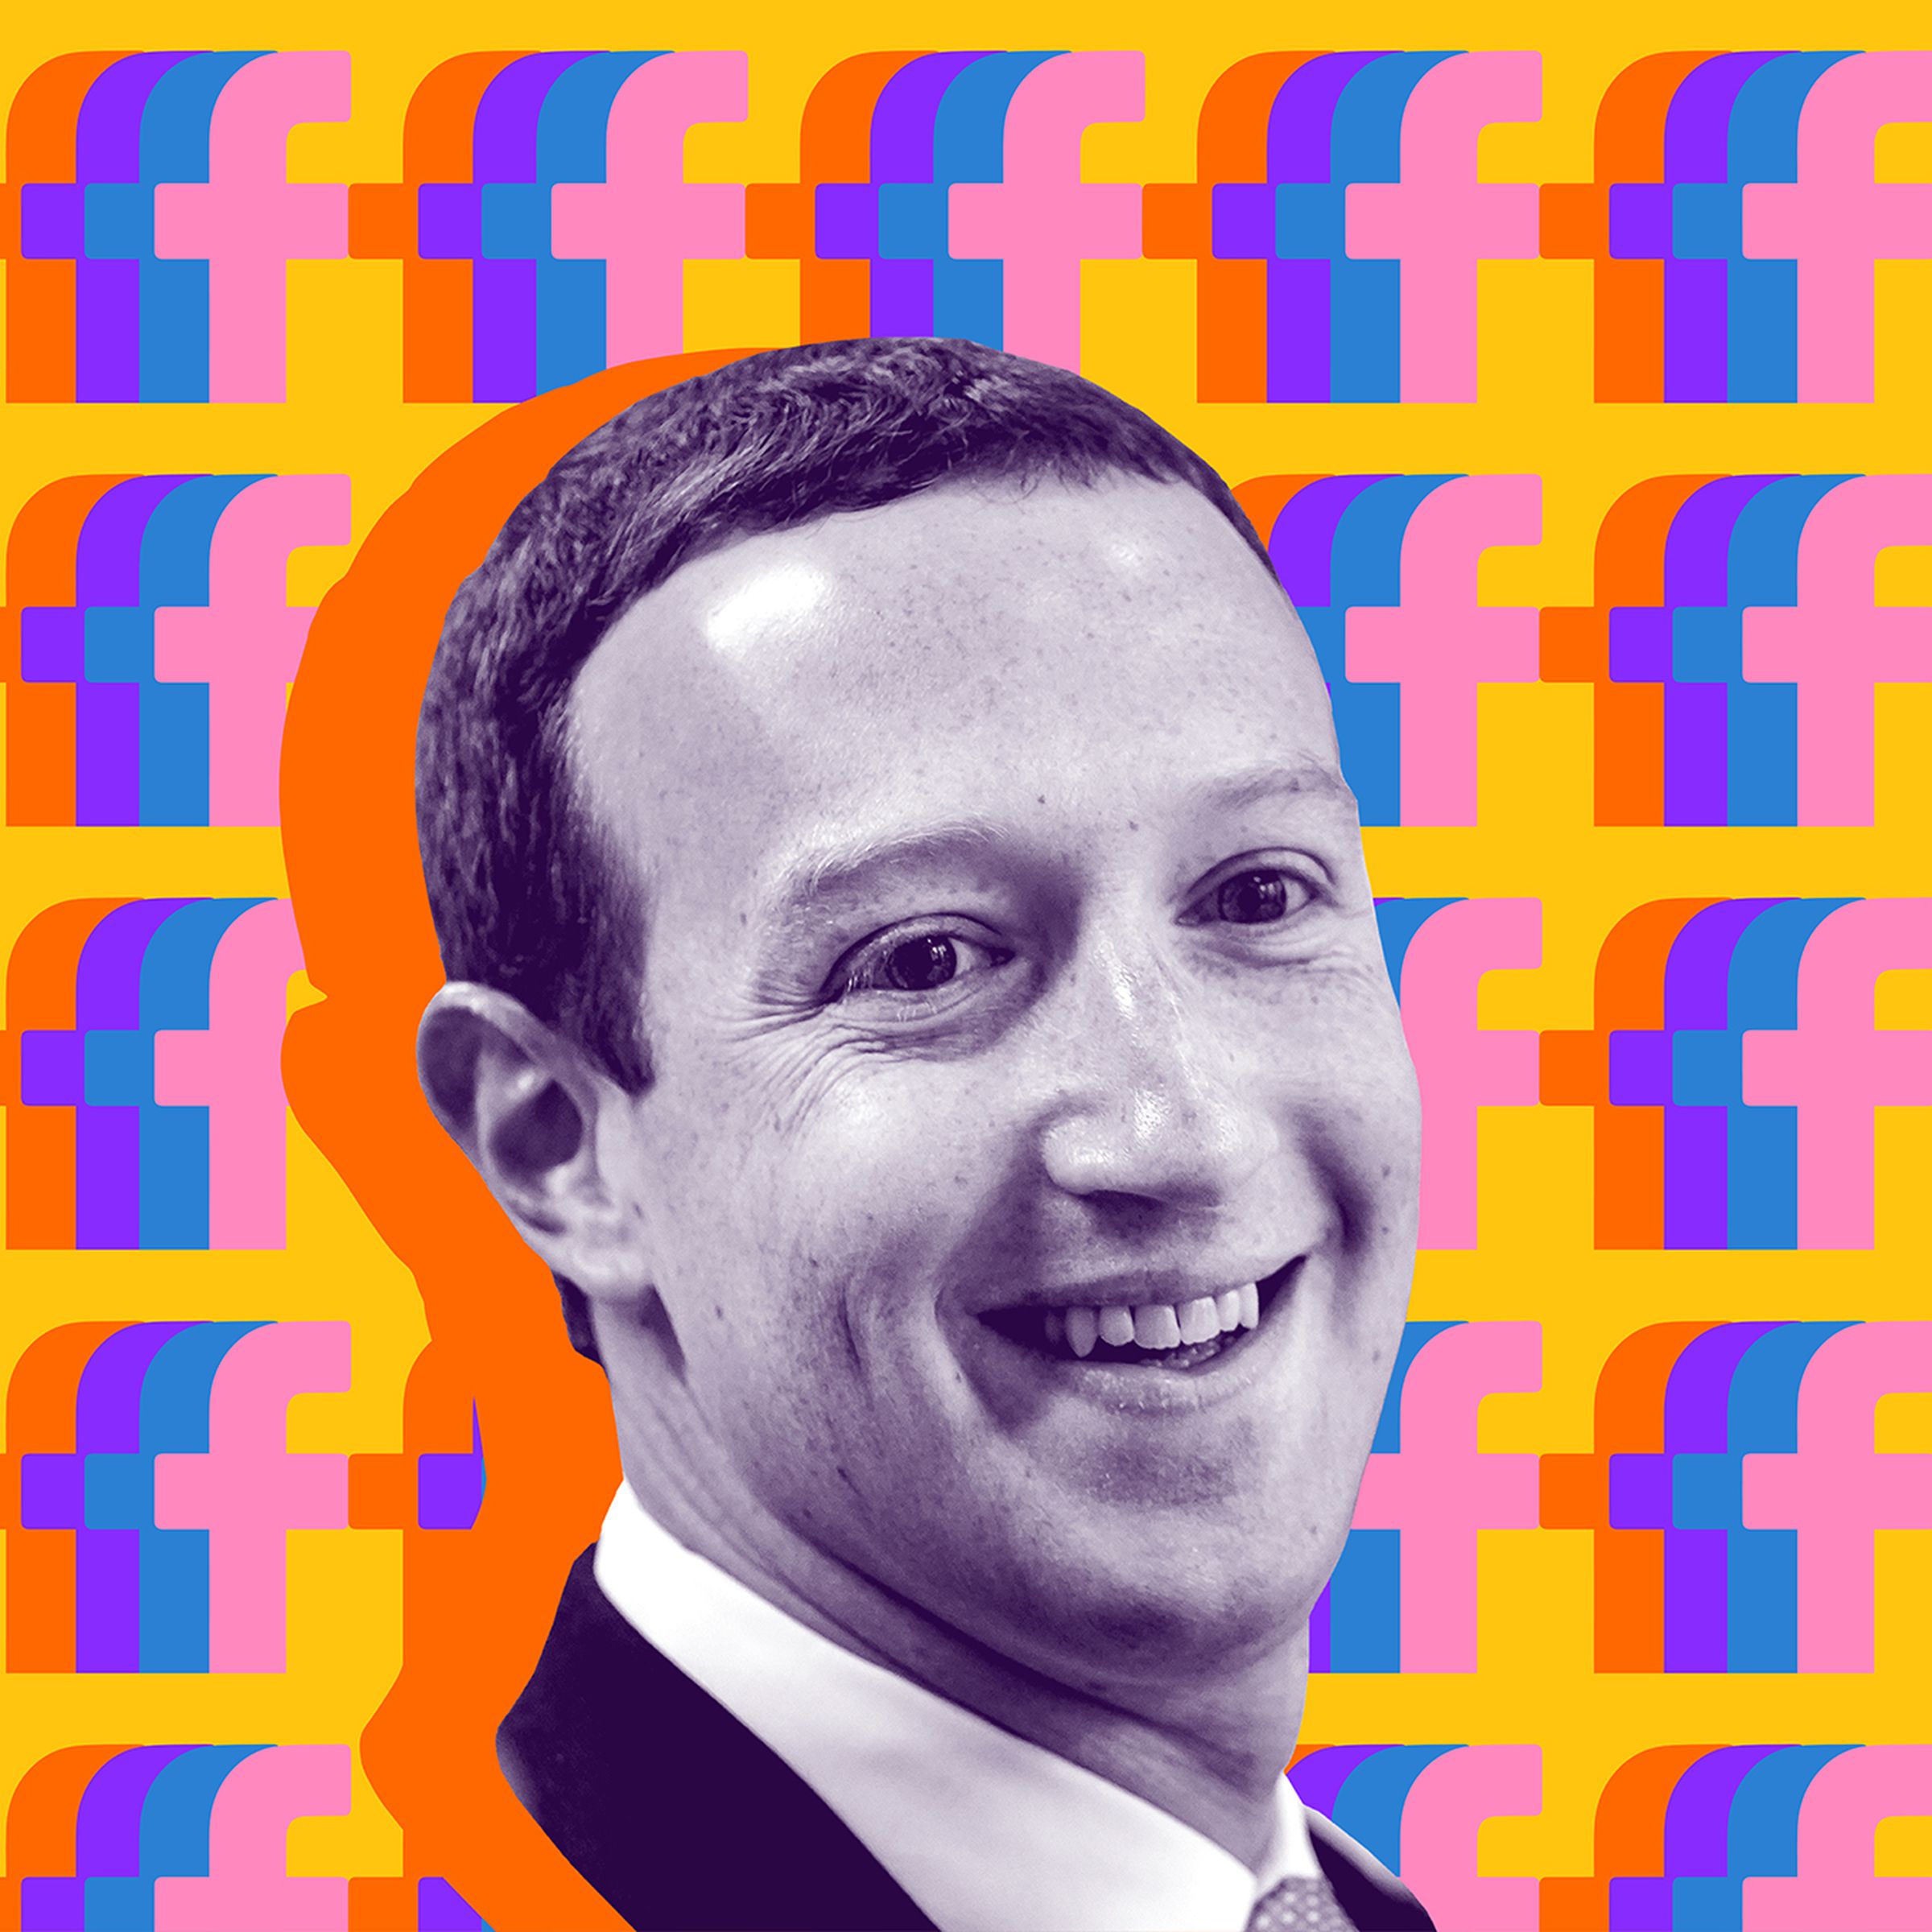 An image showing Mark Zuckerberg